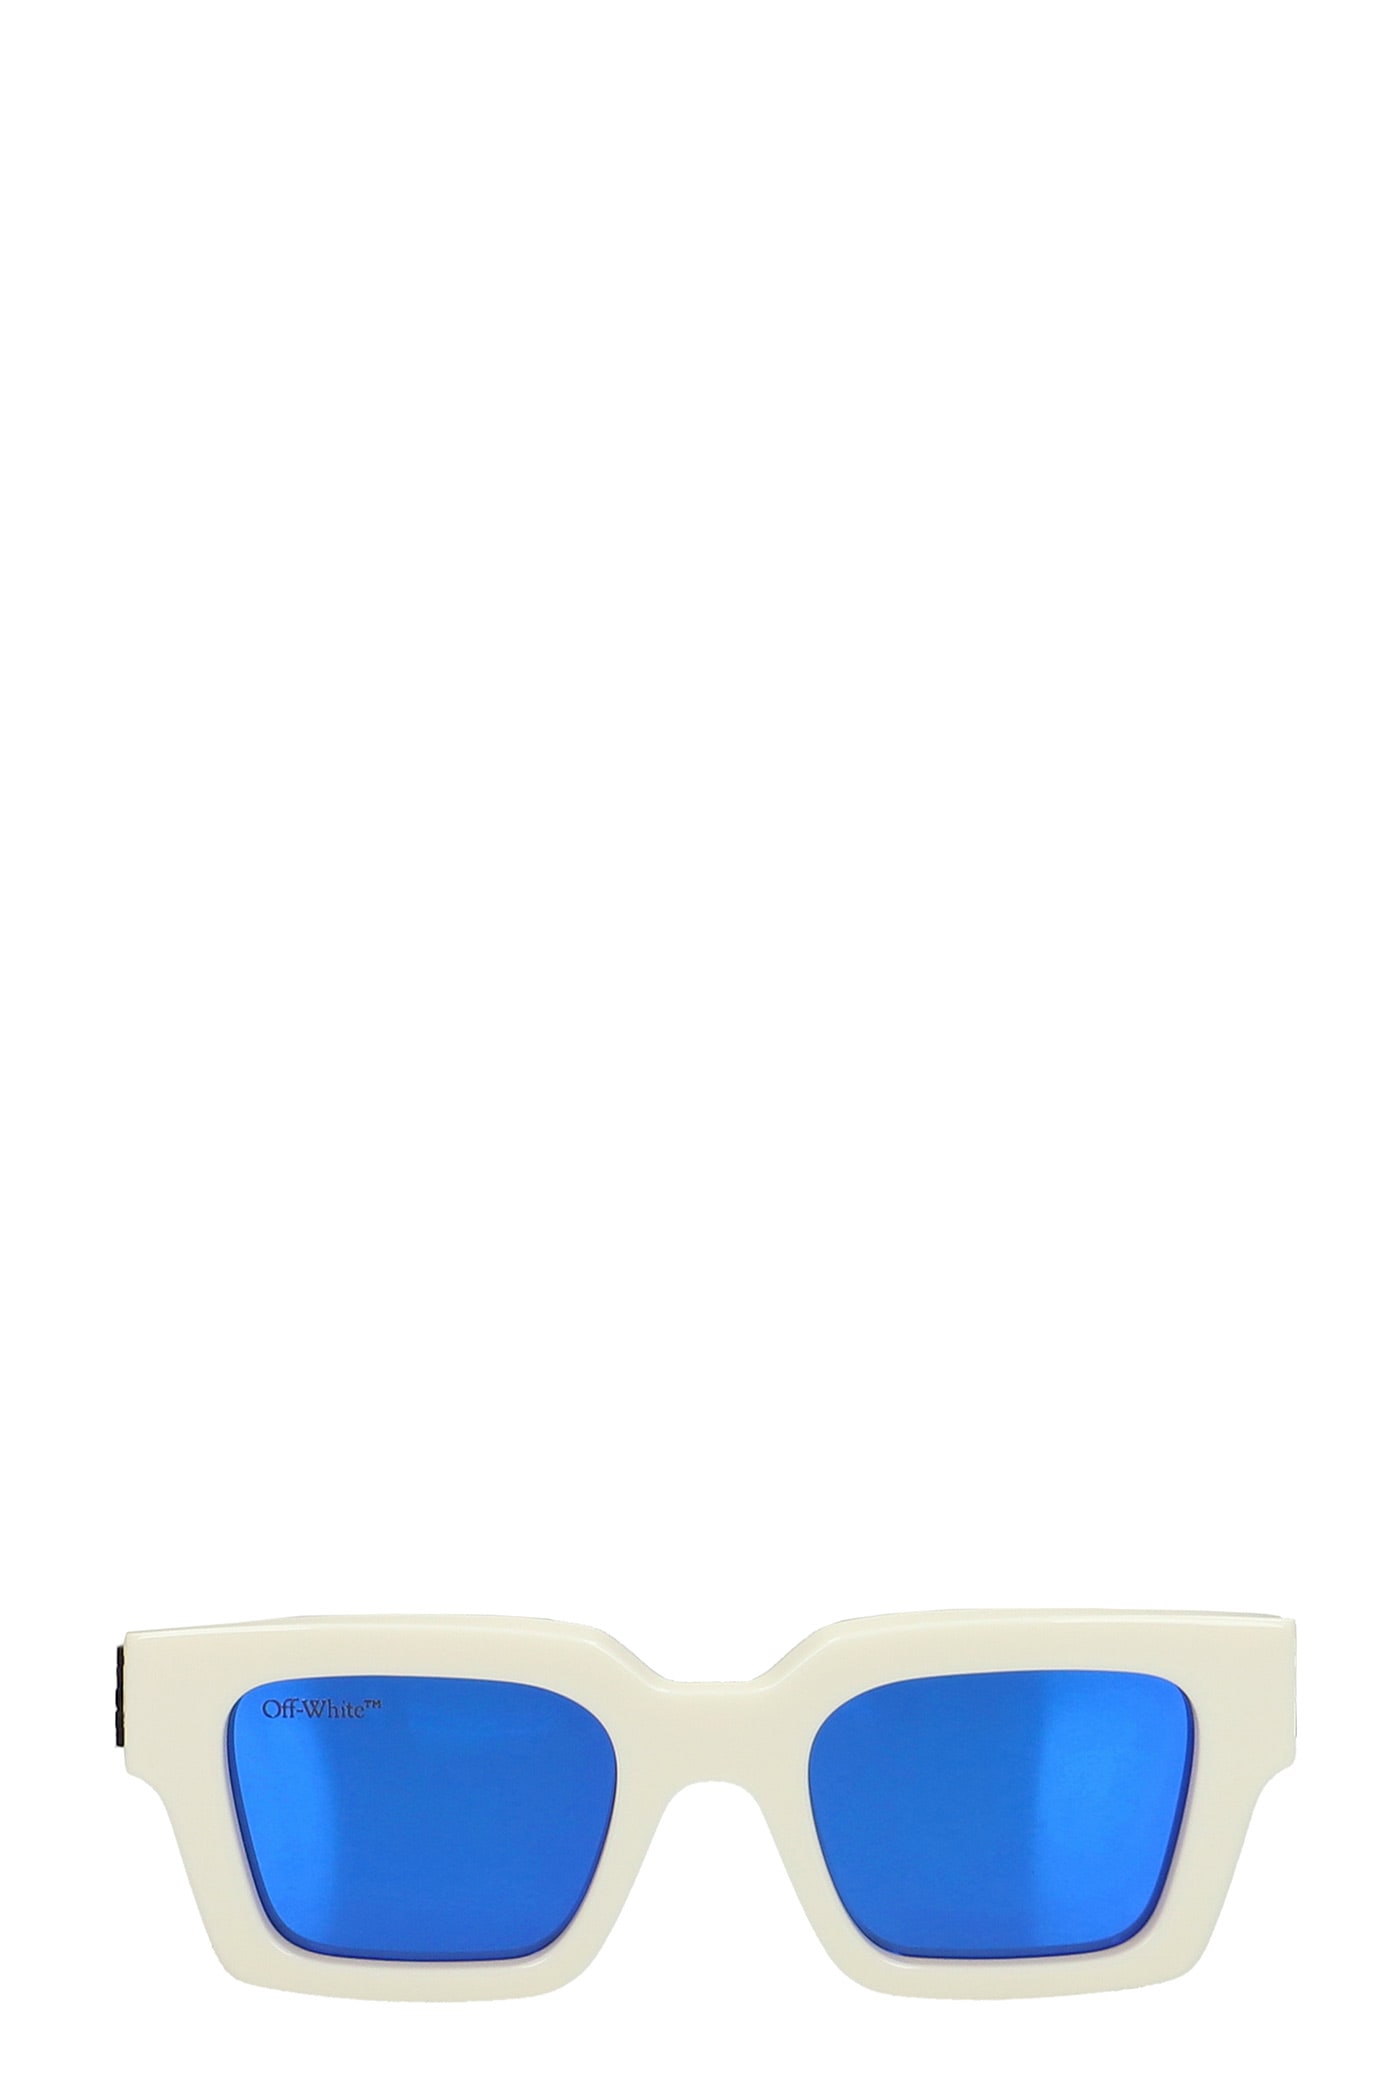 Off-white Sunglasses In White Acrylic